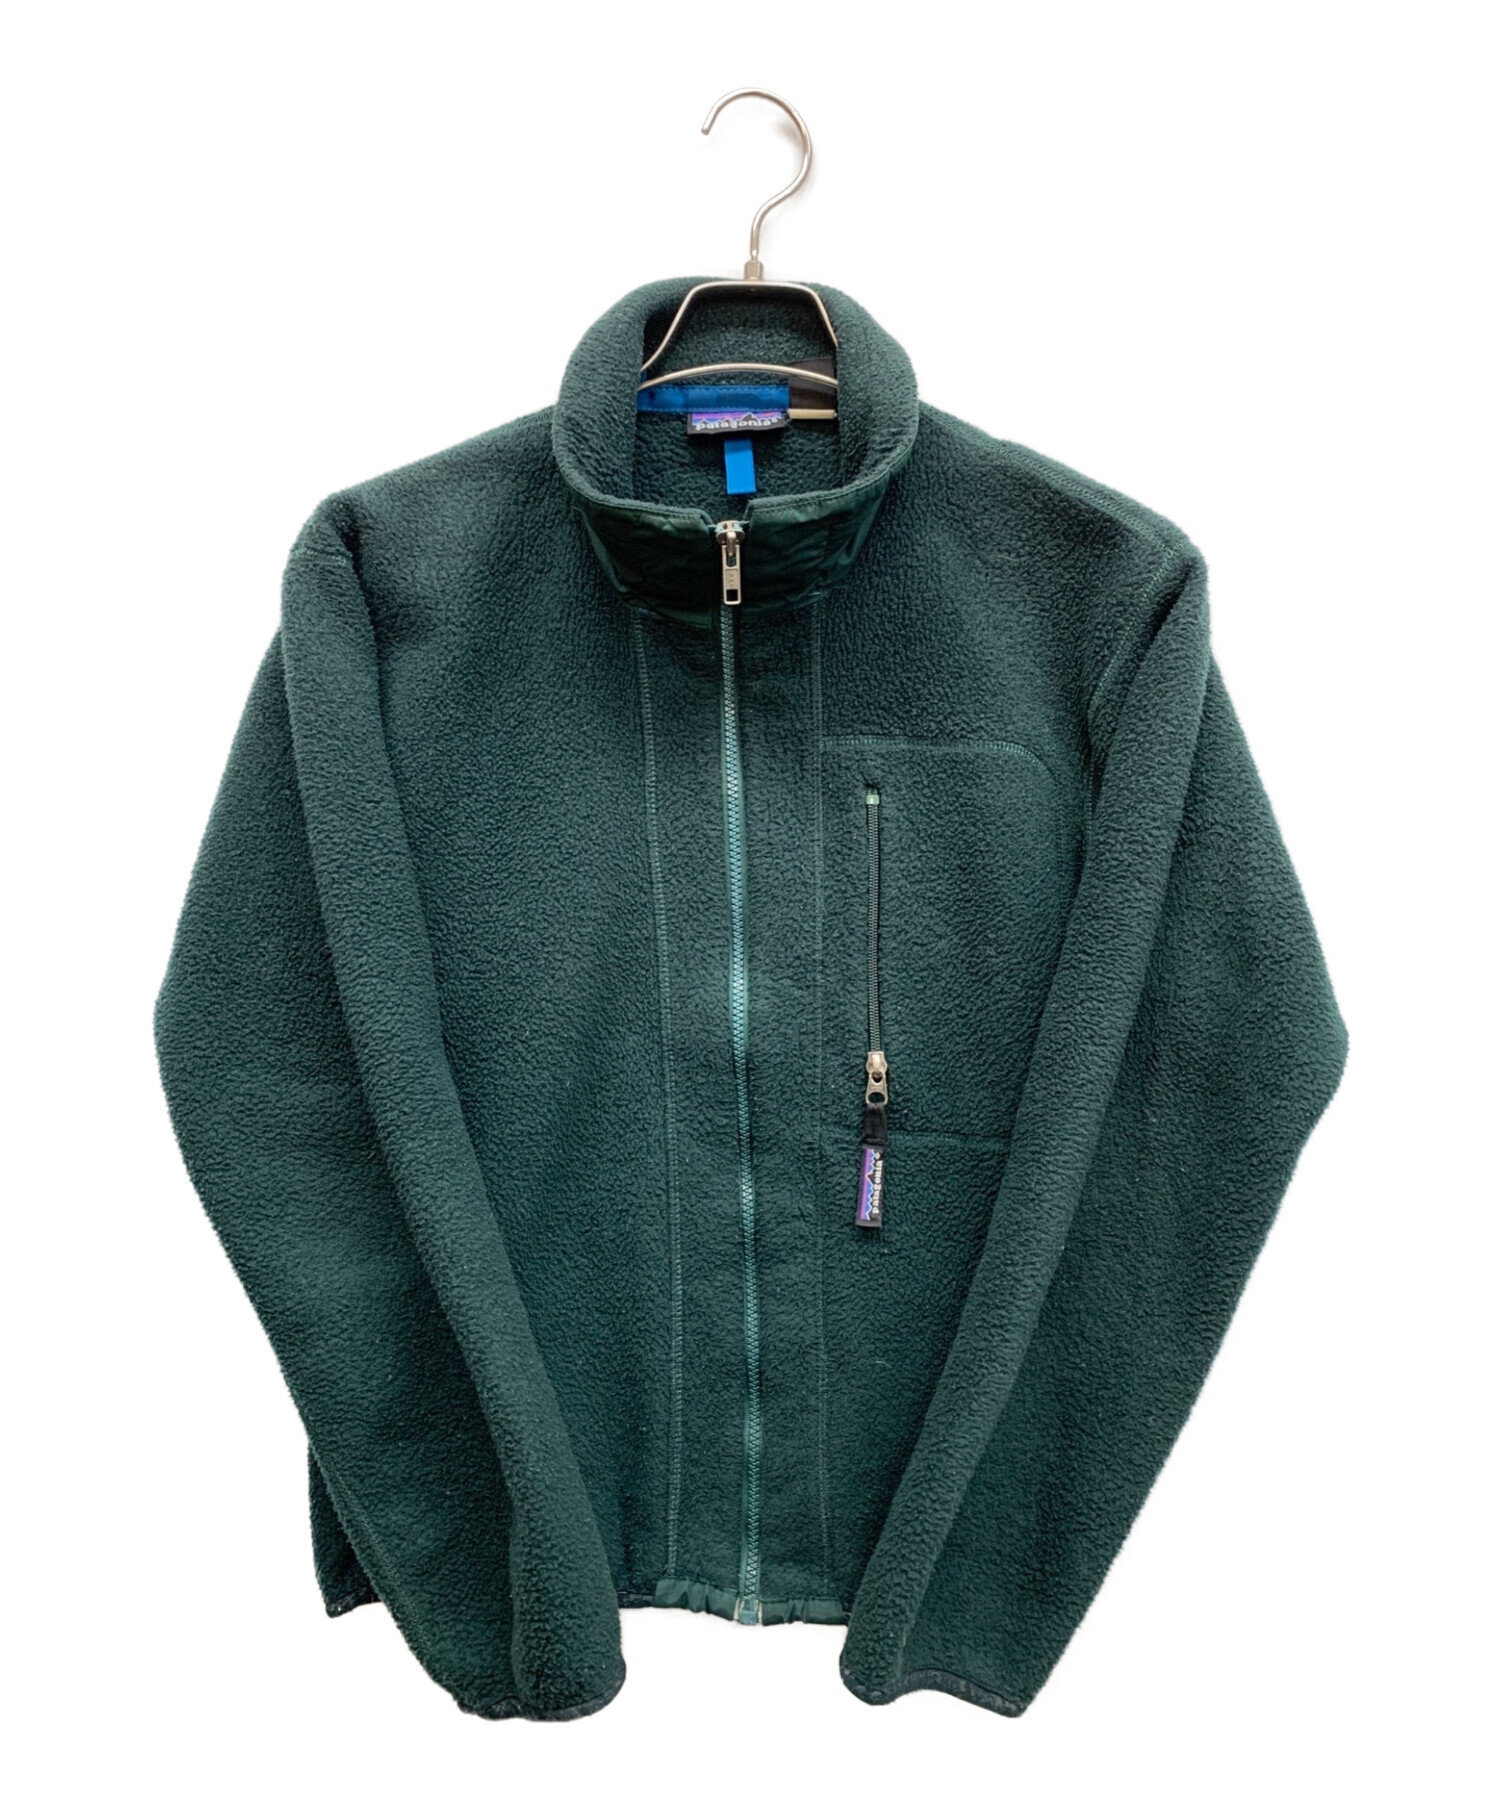 Patagonia (パタゴニア) フリースジャケット グリーン サイズ:XS